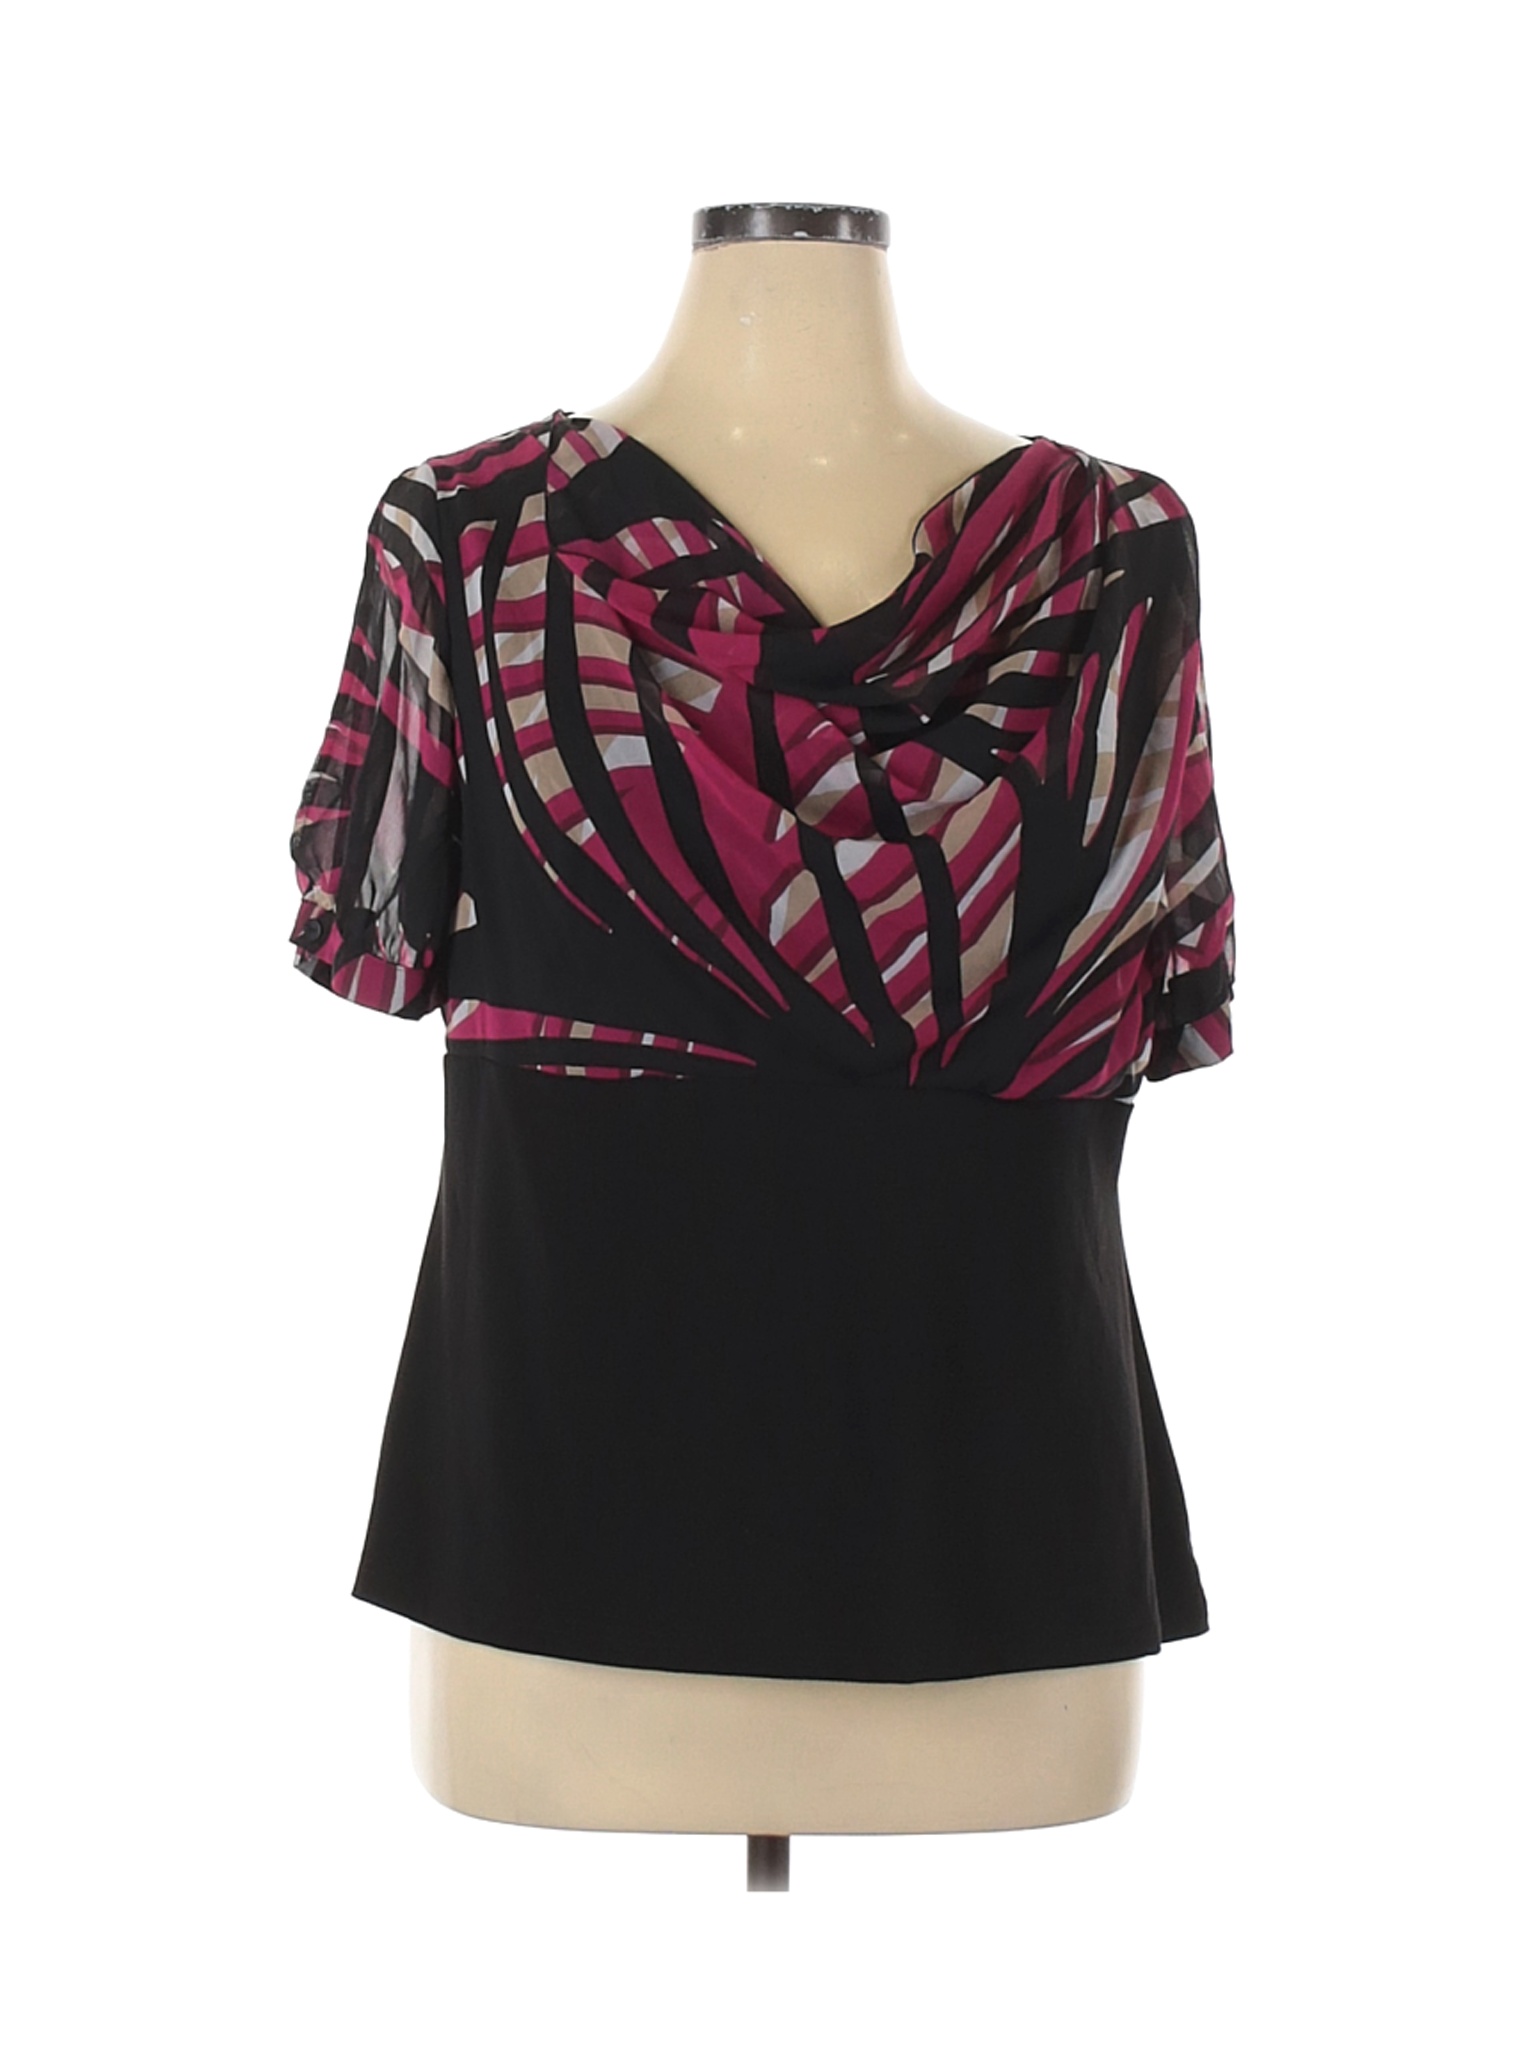 Worthington Women Black Short Sleeve Blouse 1X Plus | eBay